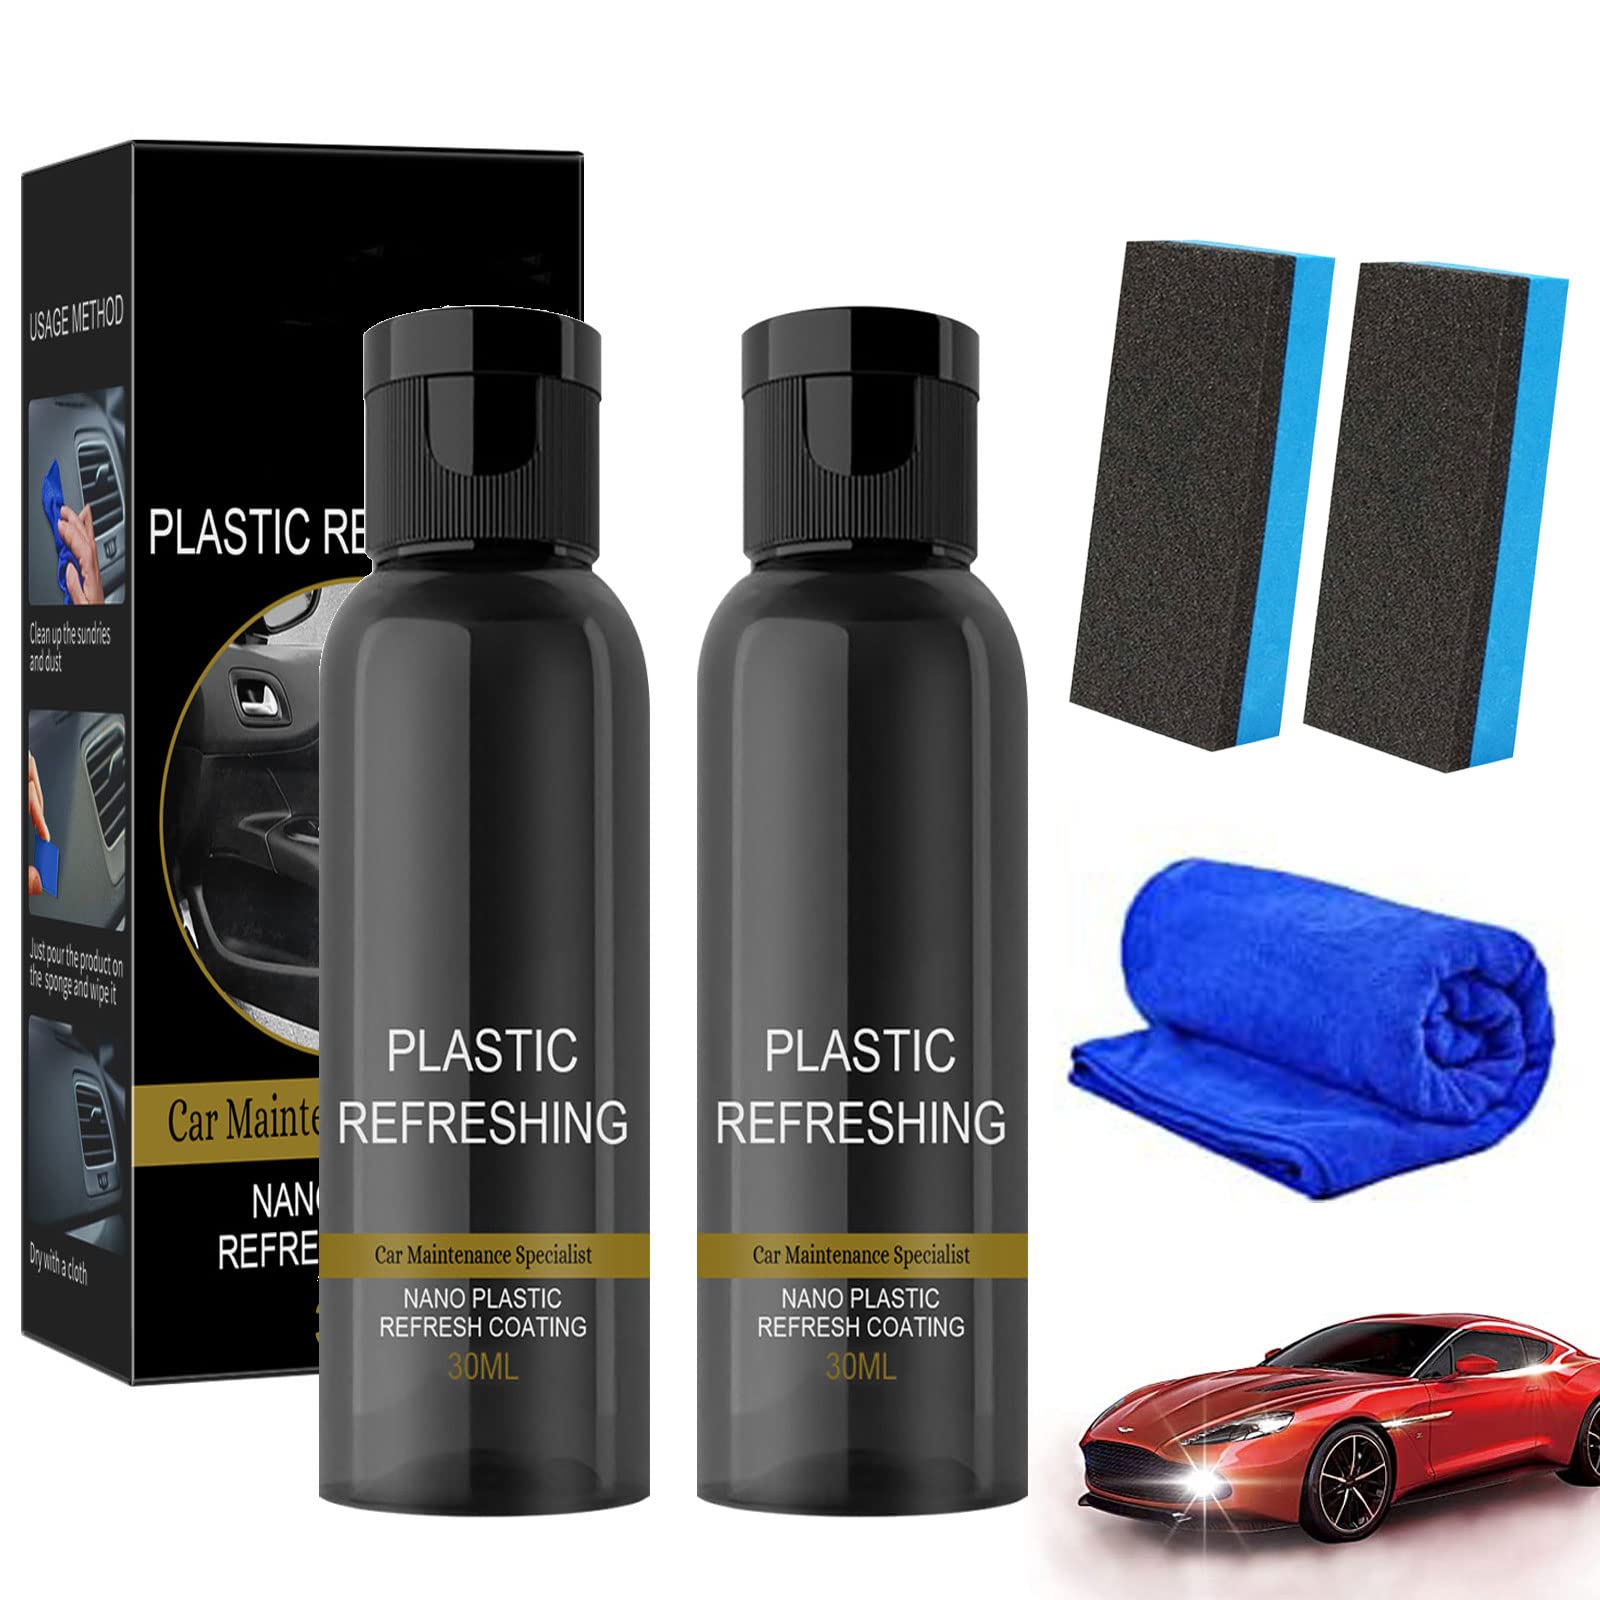 HIDRUO Ultishine Plastic Revitalizing Coating Agent Set, Plastic Refreshing Car Black, Powerful Stain Removal Kit for Car, Nano Plastic Refreshing Coating for Car Quick Restorer (30ML, 2PCS) von HIDRUO